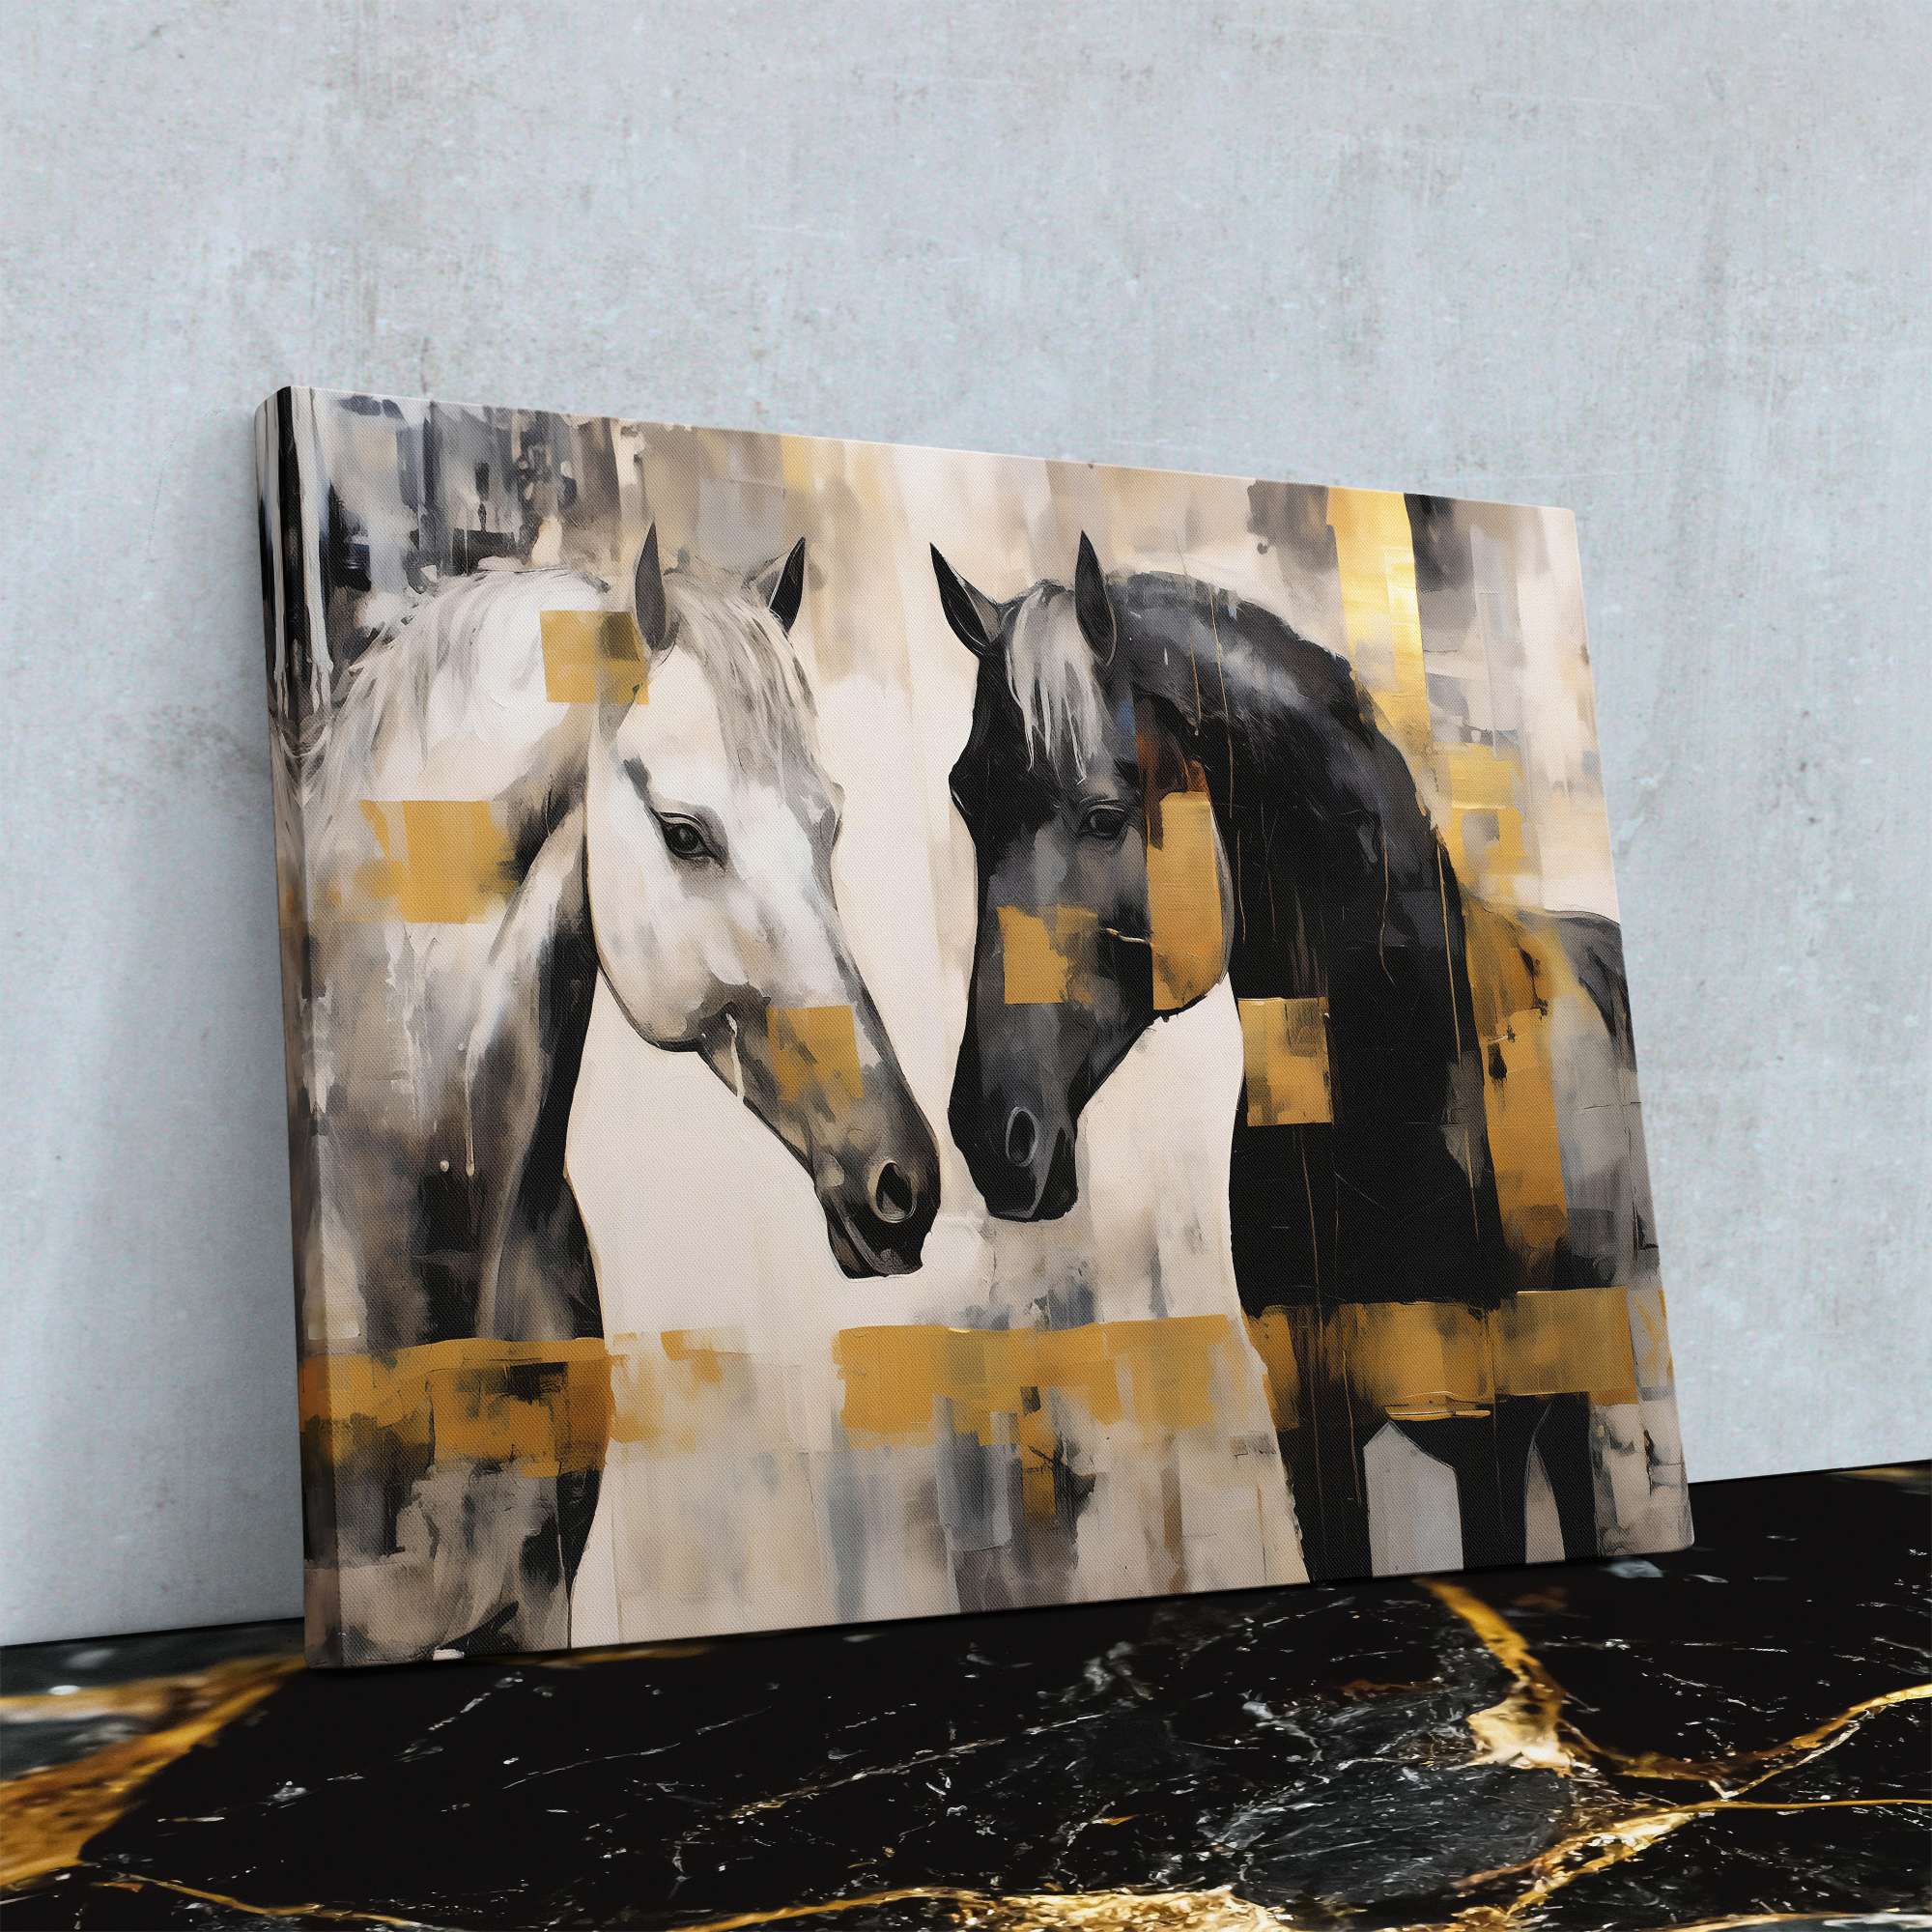 White and Black Horses - Luxury Wall Art